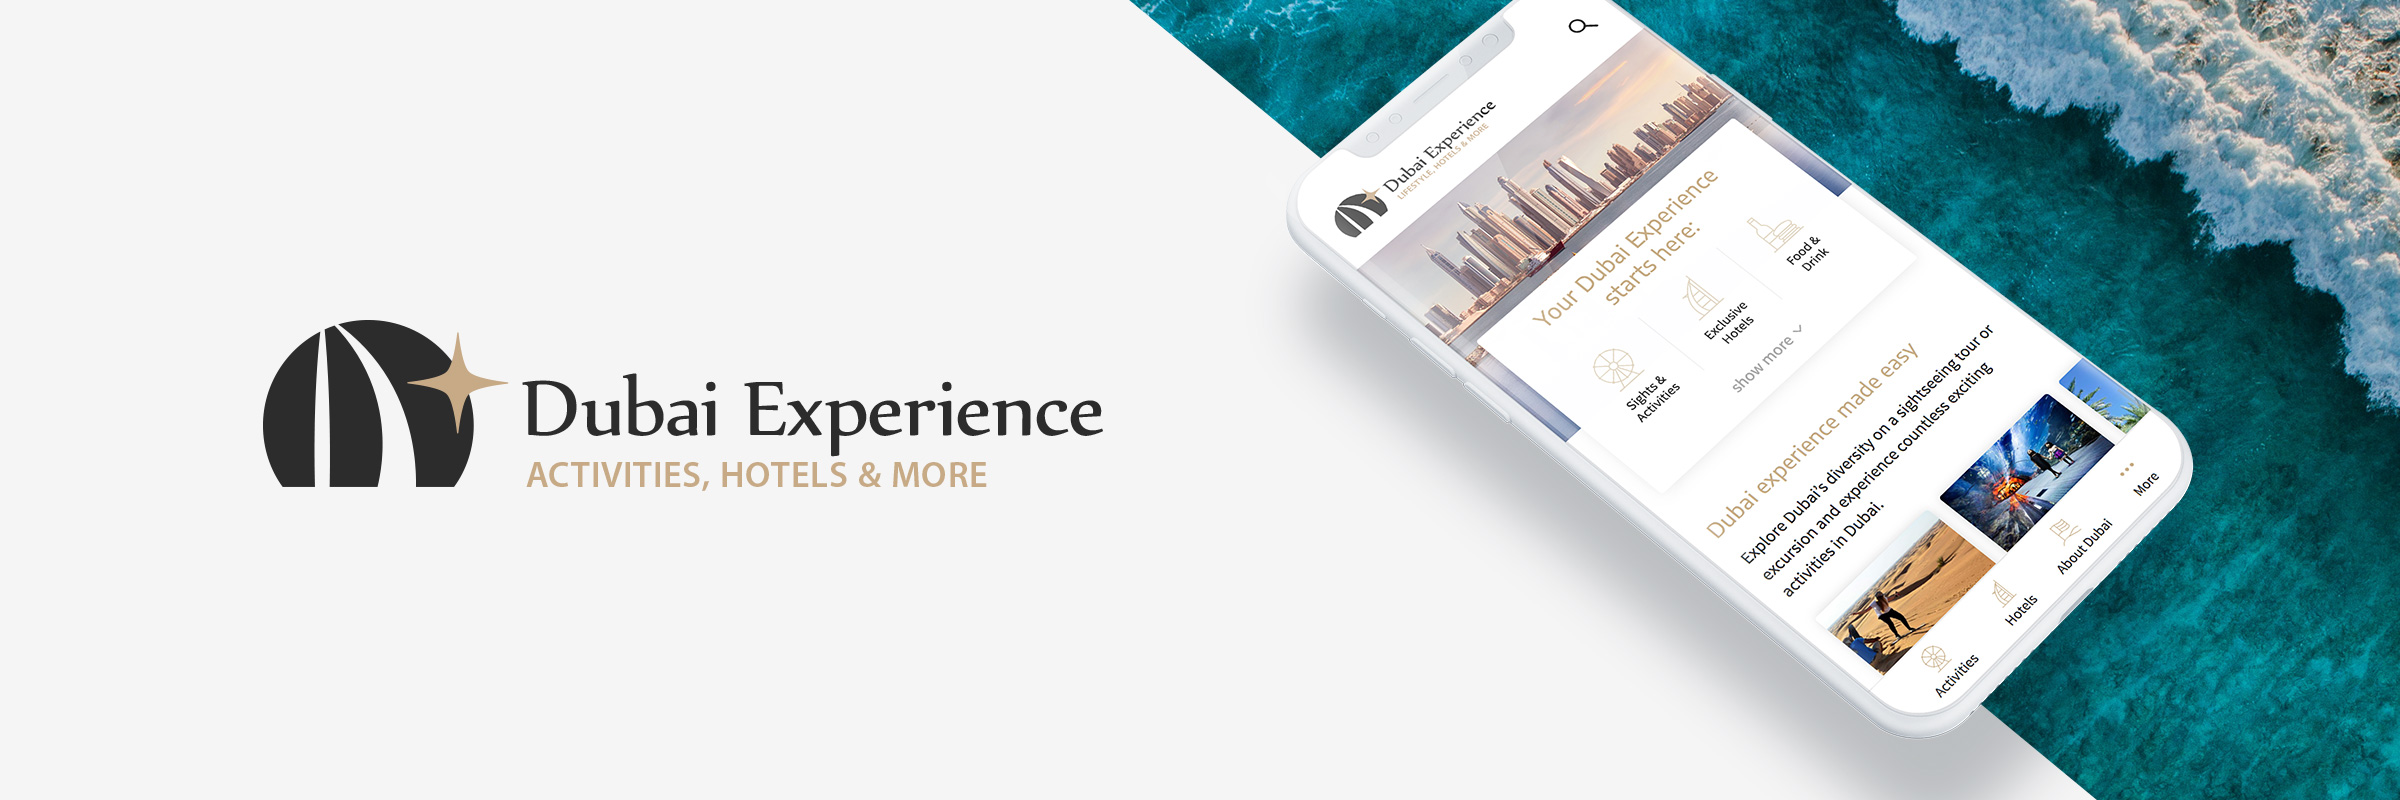 Project Dubai-Experience.com